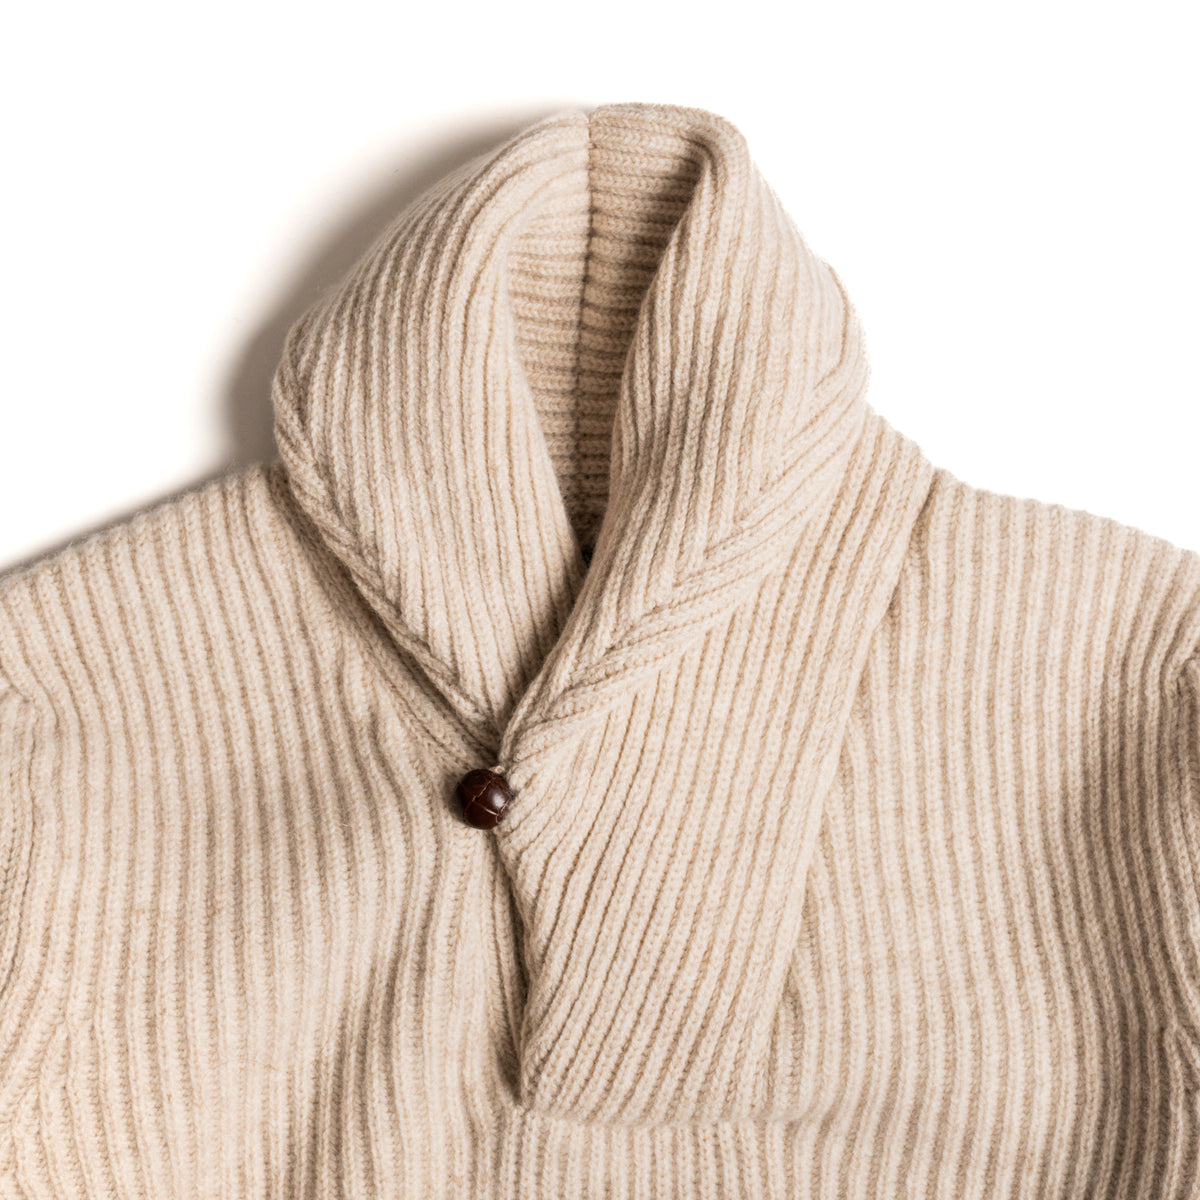 Linen Lambswool Shawl Collar Sweater